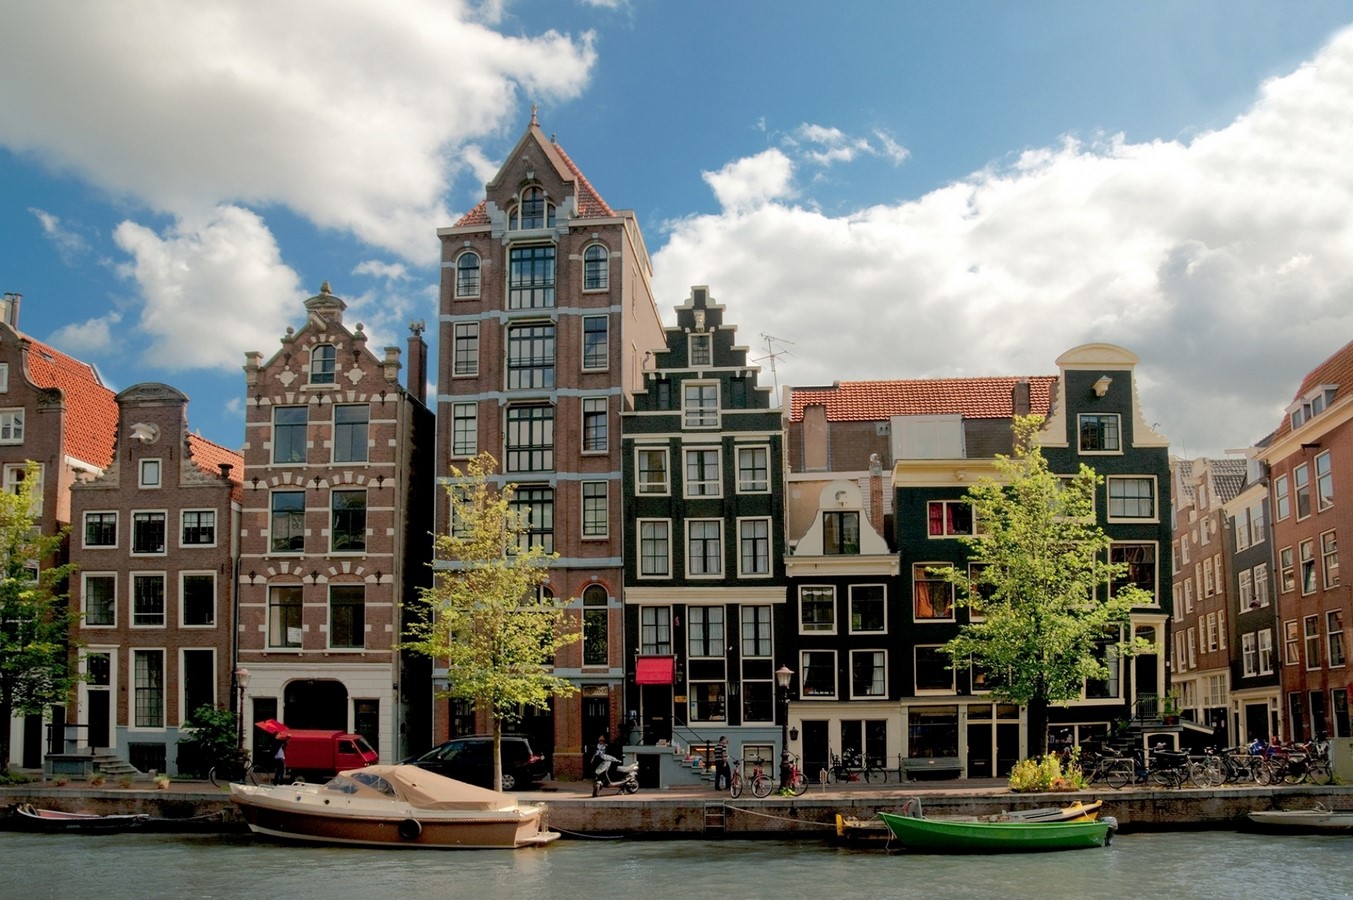 Architectural development of Amsterdam, Netherlands - Sheet3